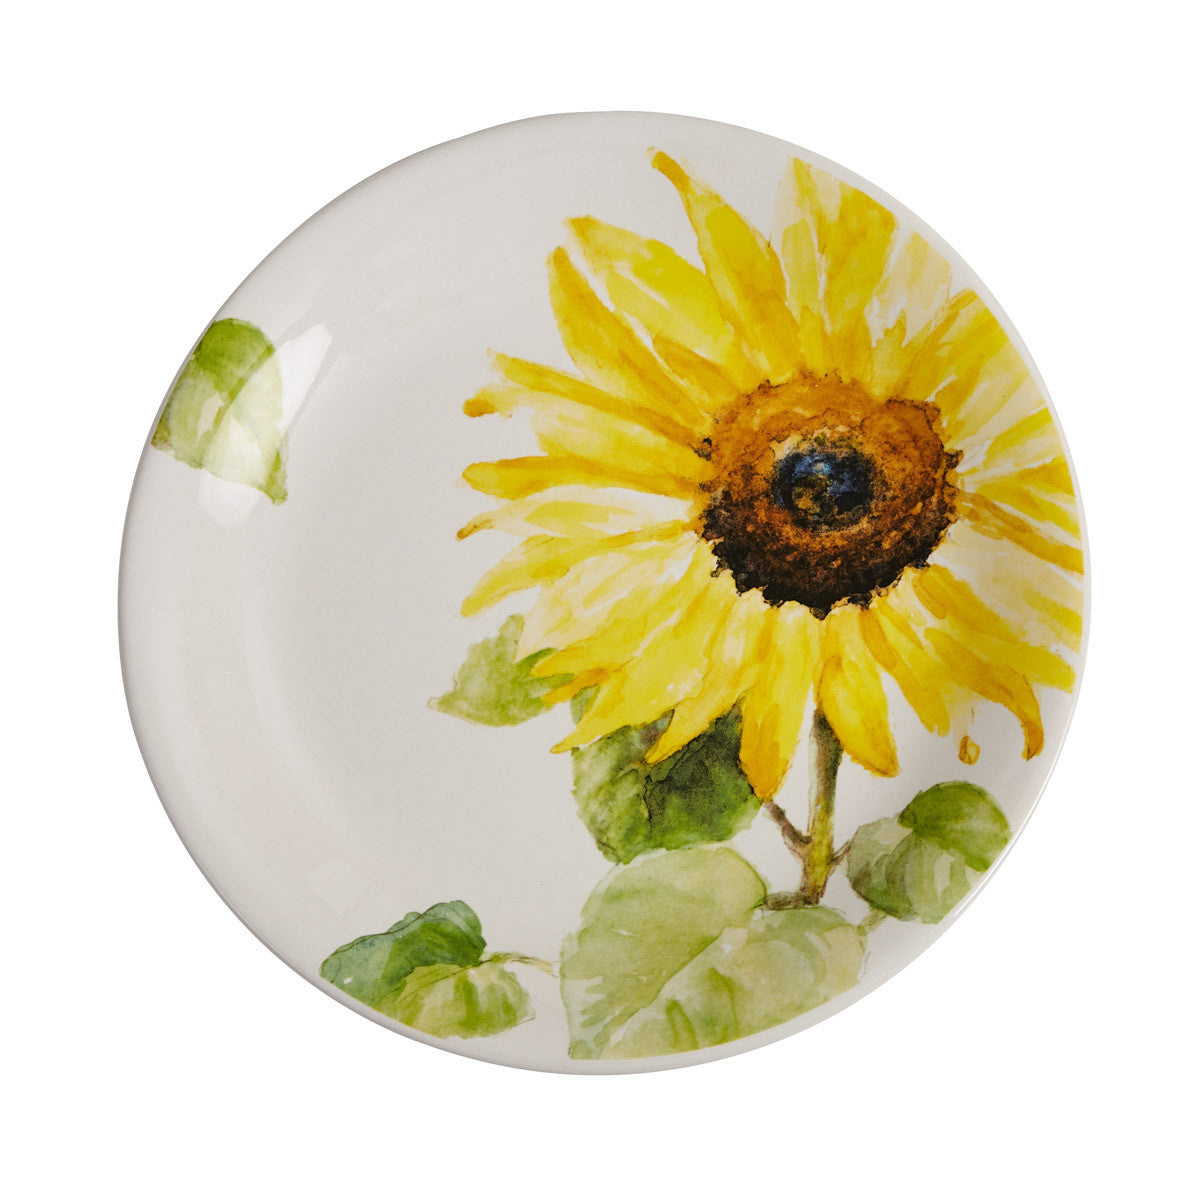 Follow The Sun Salad Plates - Set of 4 Park Designs